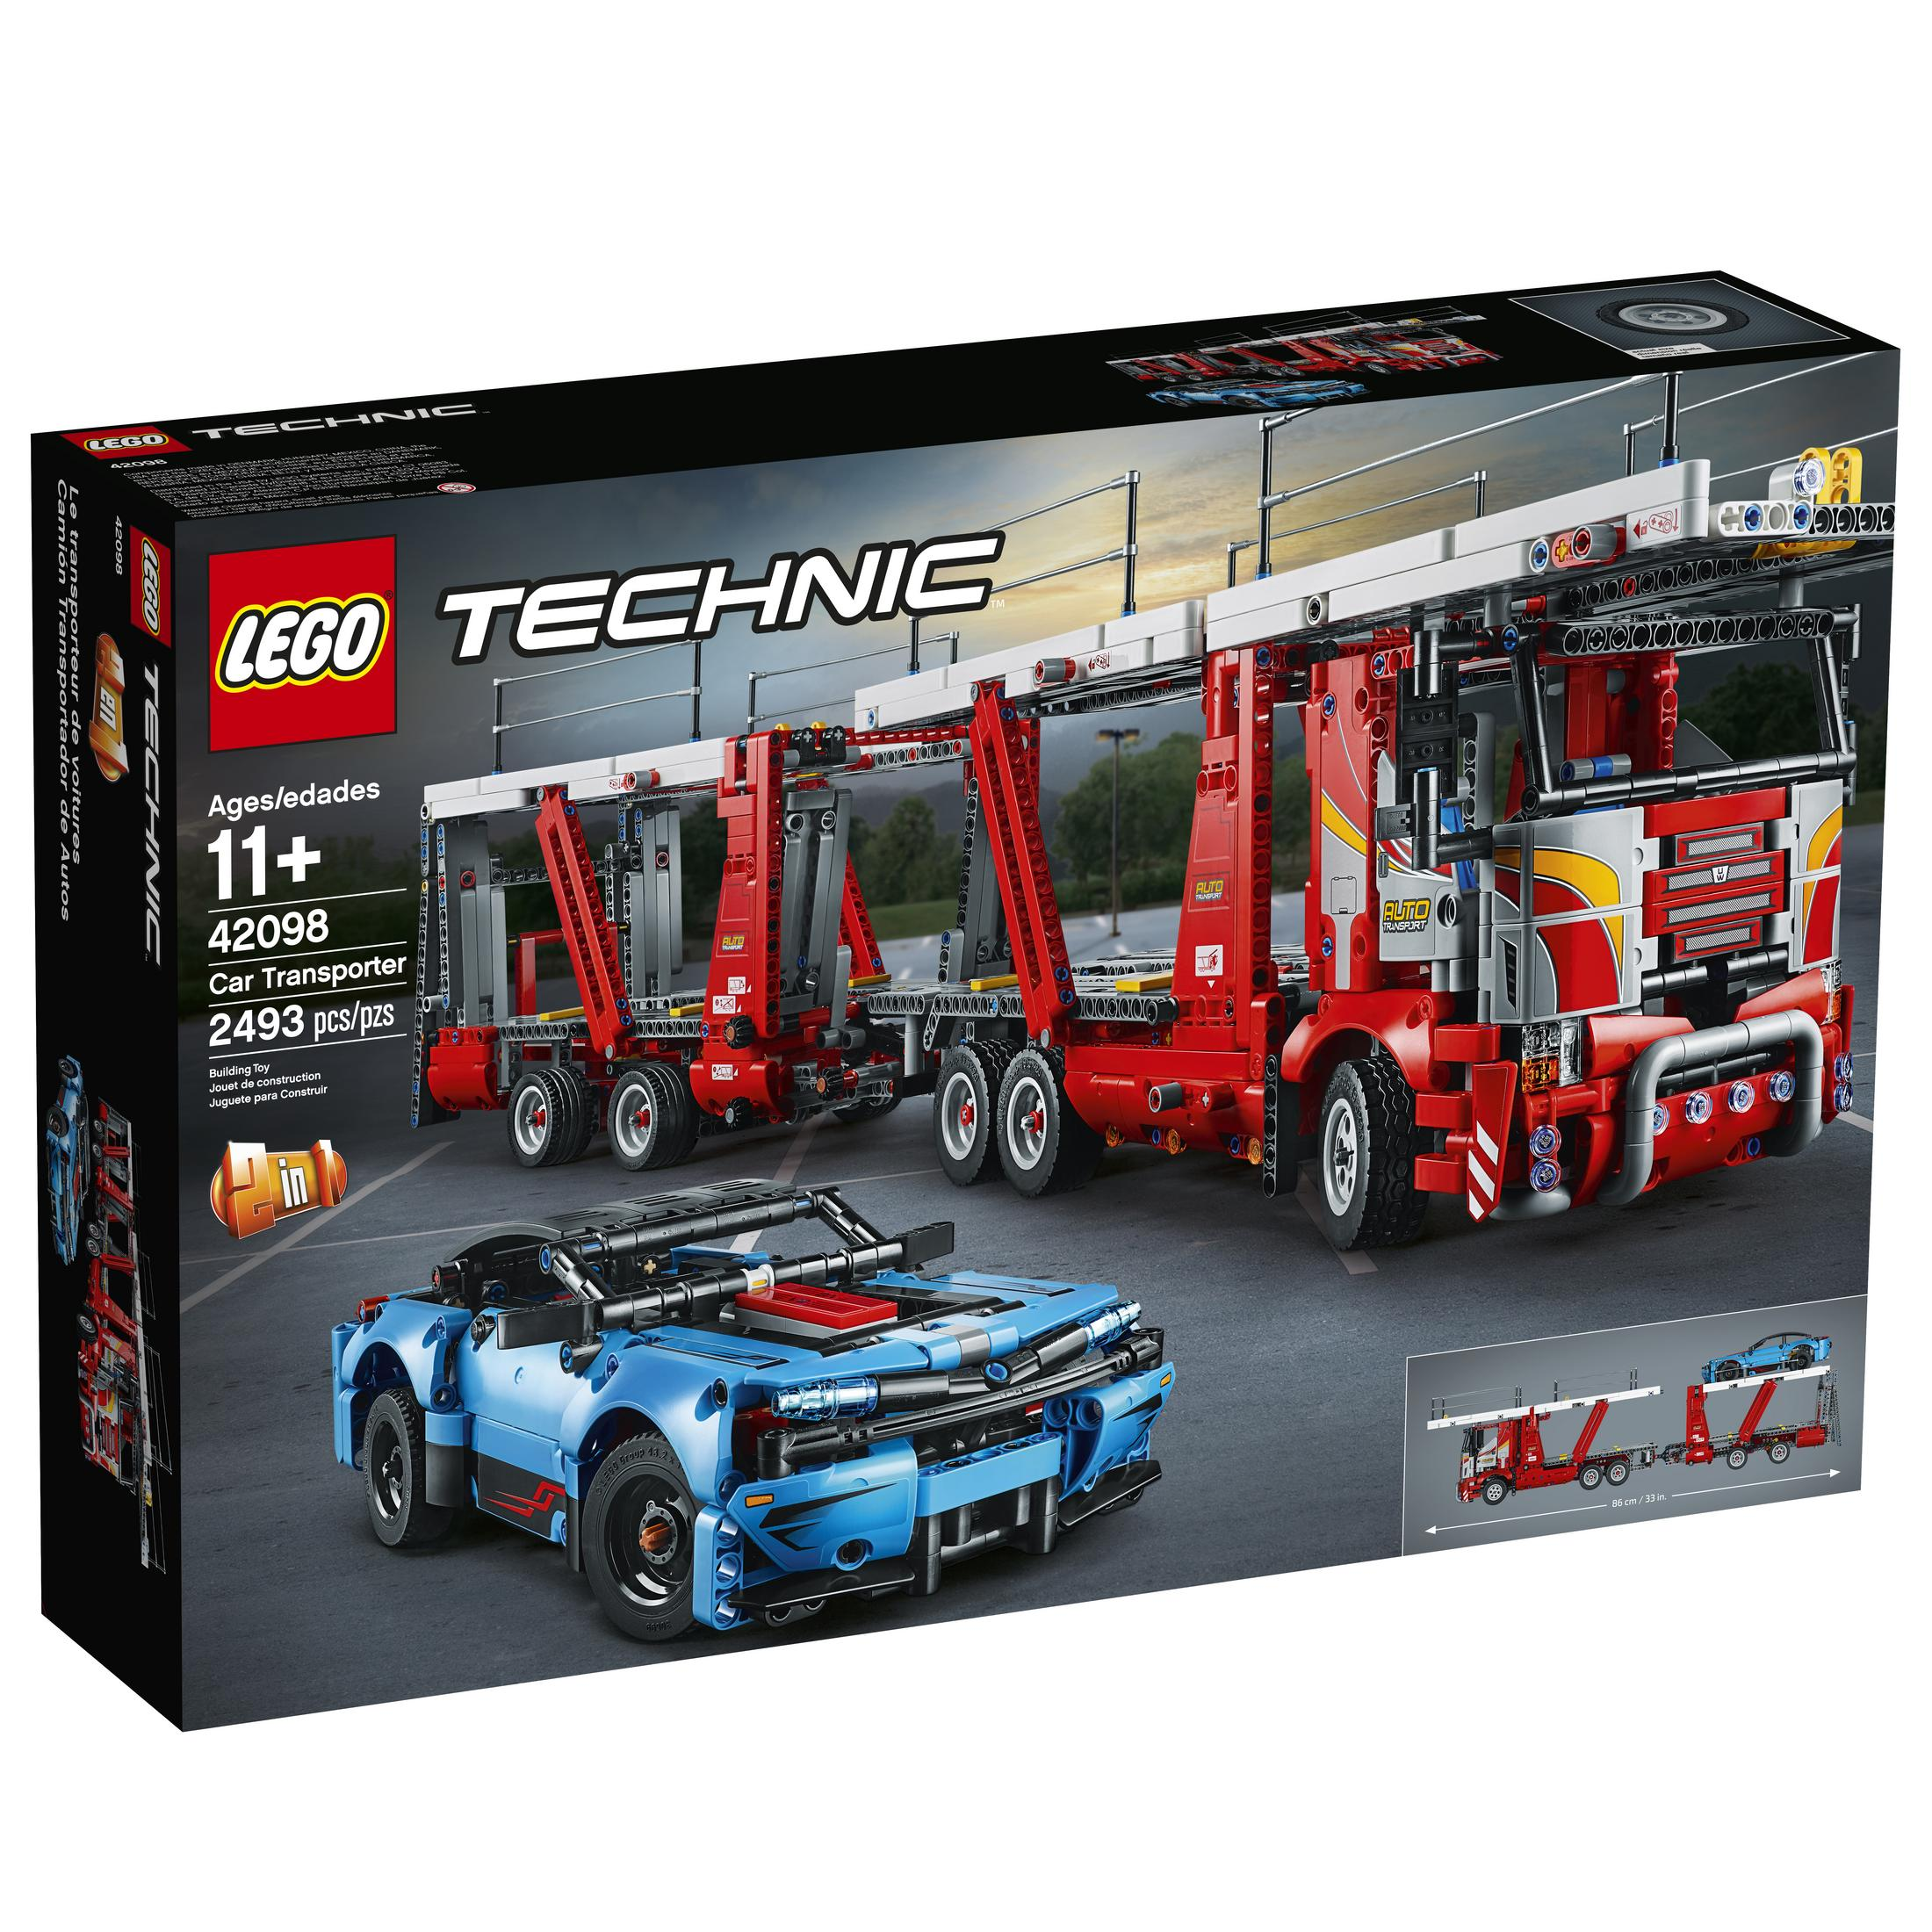 LEGO 42098 AUTOTRANSPORTER Bausatz, Mehrfarbig